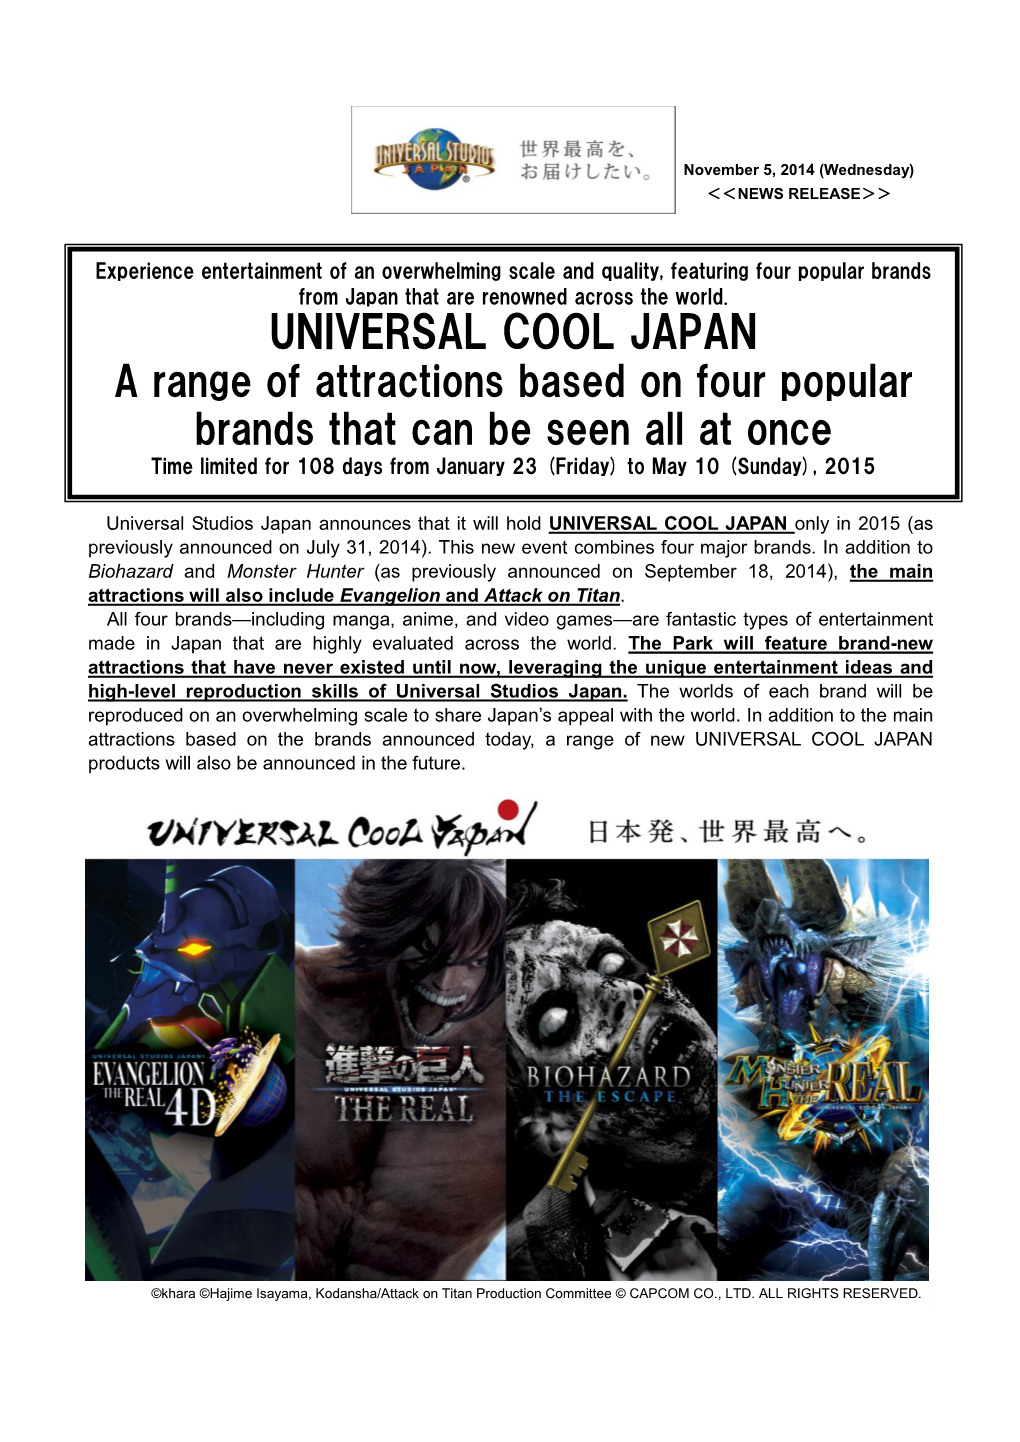 Universal Cool Japan